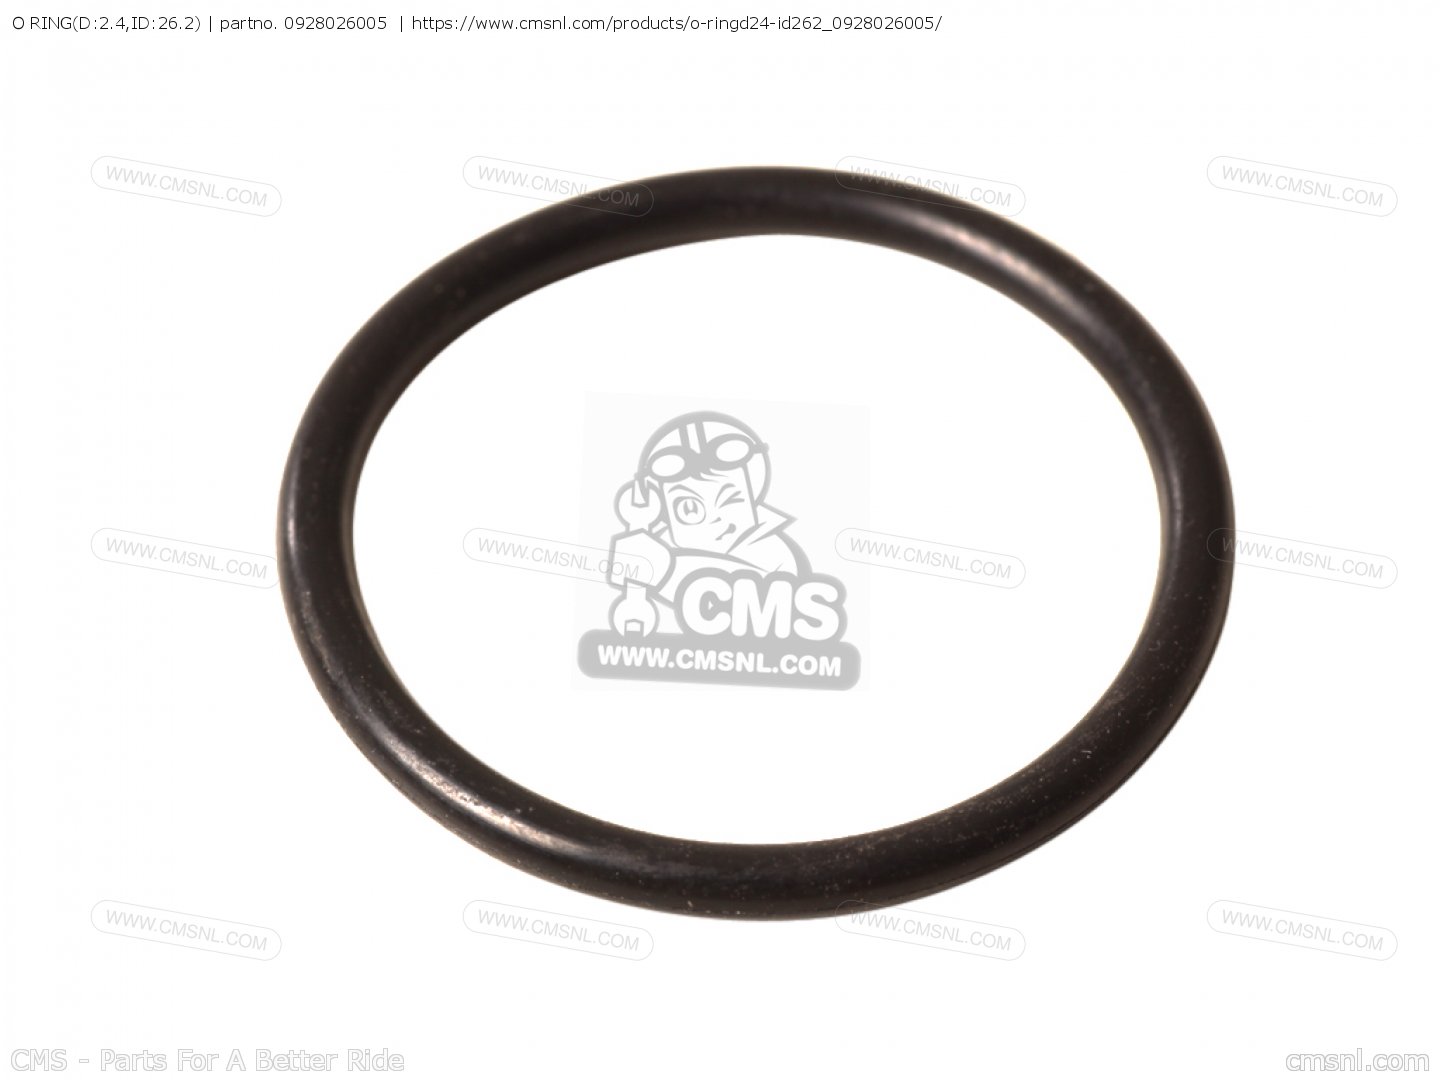 0928026005: O Ring(d:2.4,id:26.2) Suzuki - buy the 09280-26005 at CMSNL